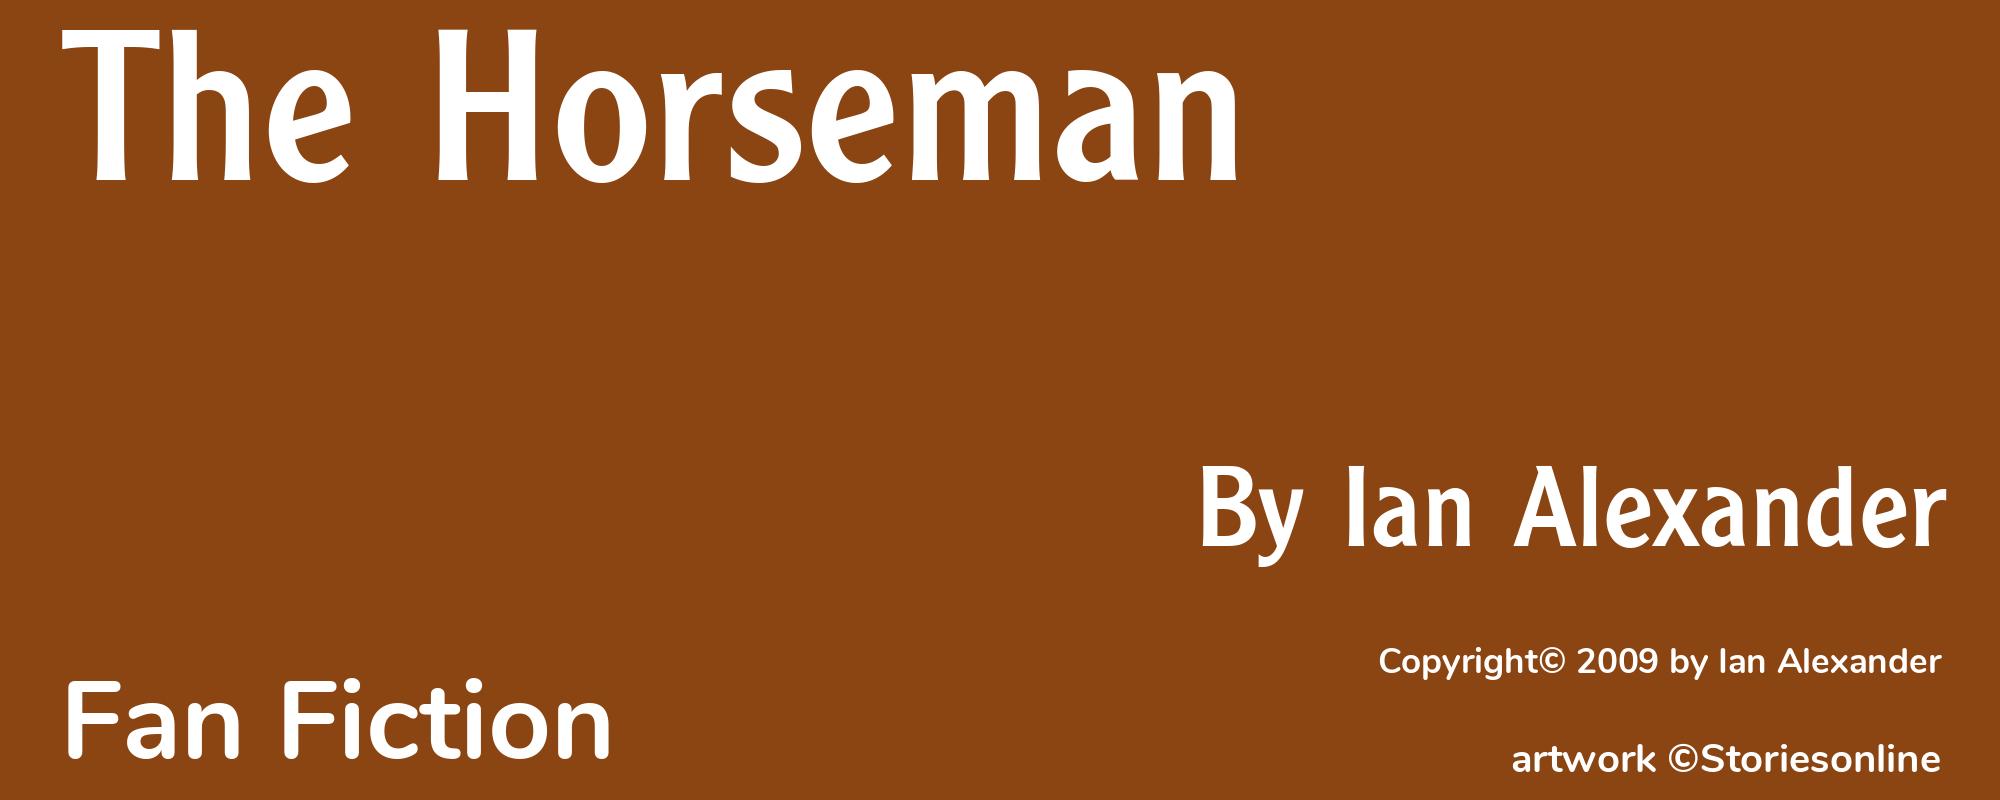 The Horseman - Cover